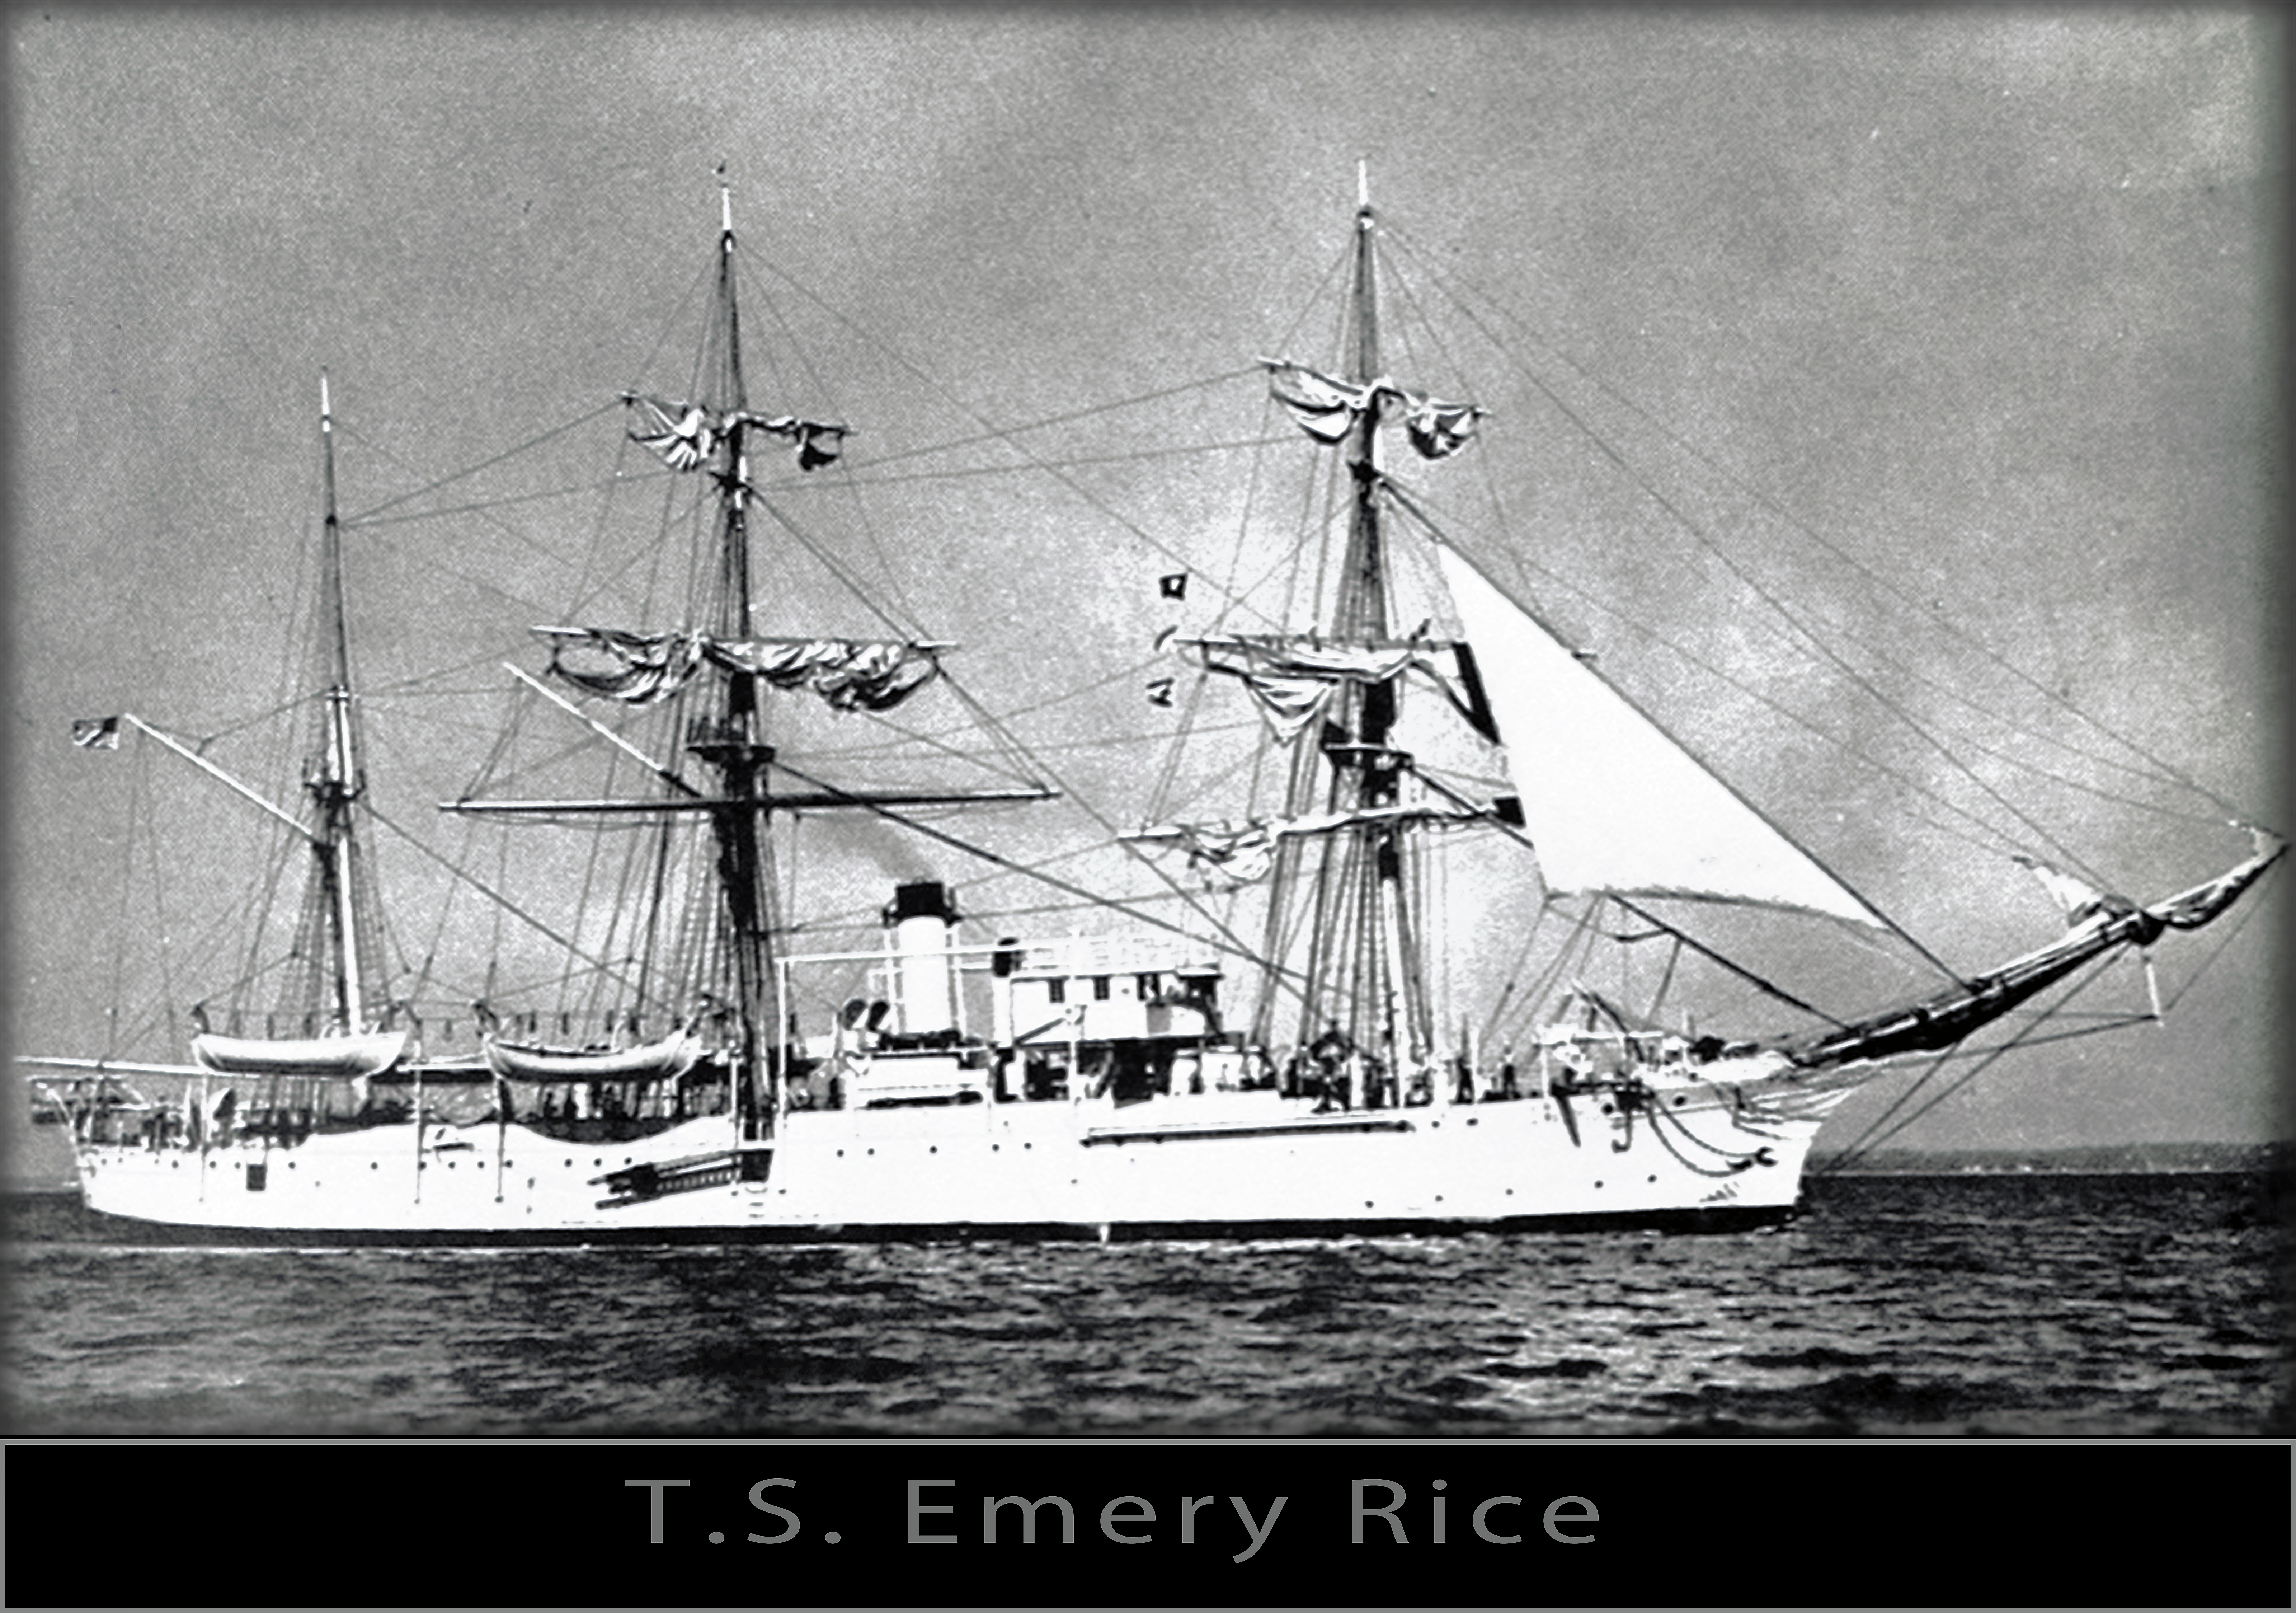 T.S. Emery Rice